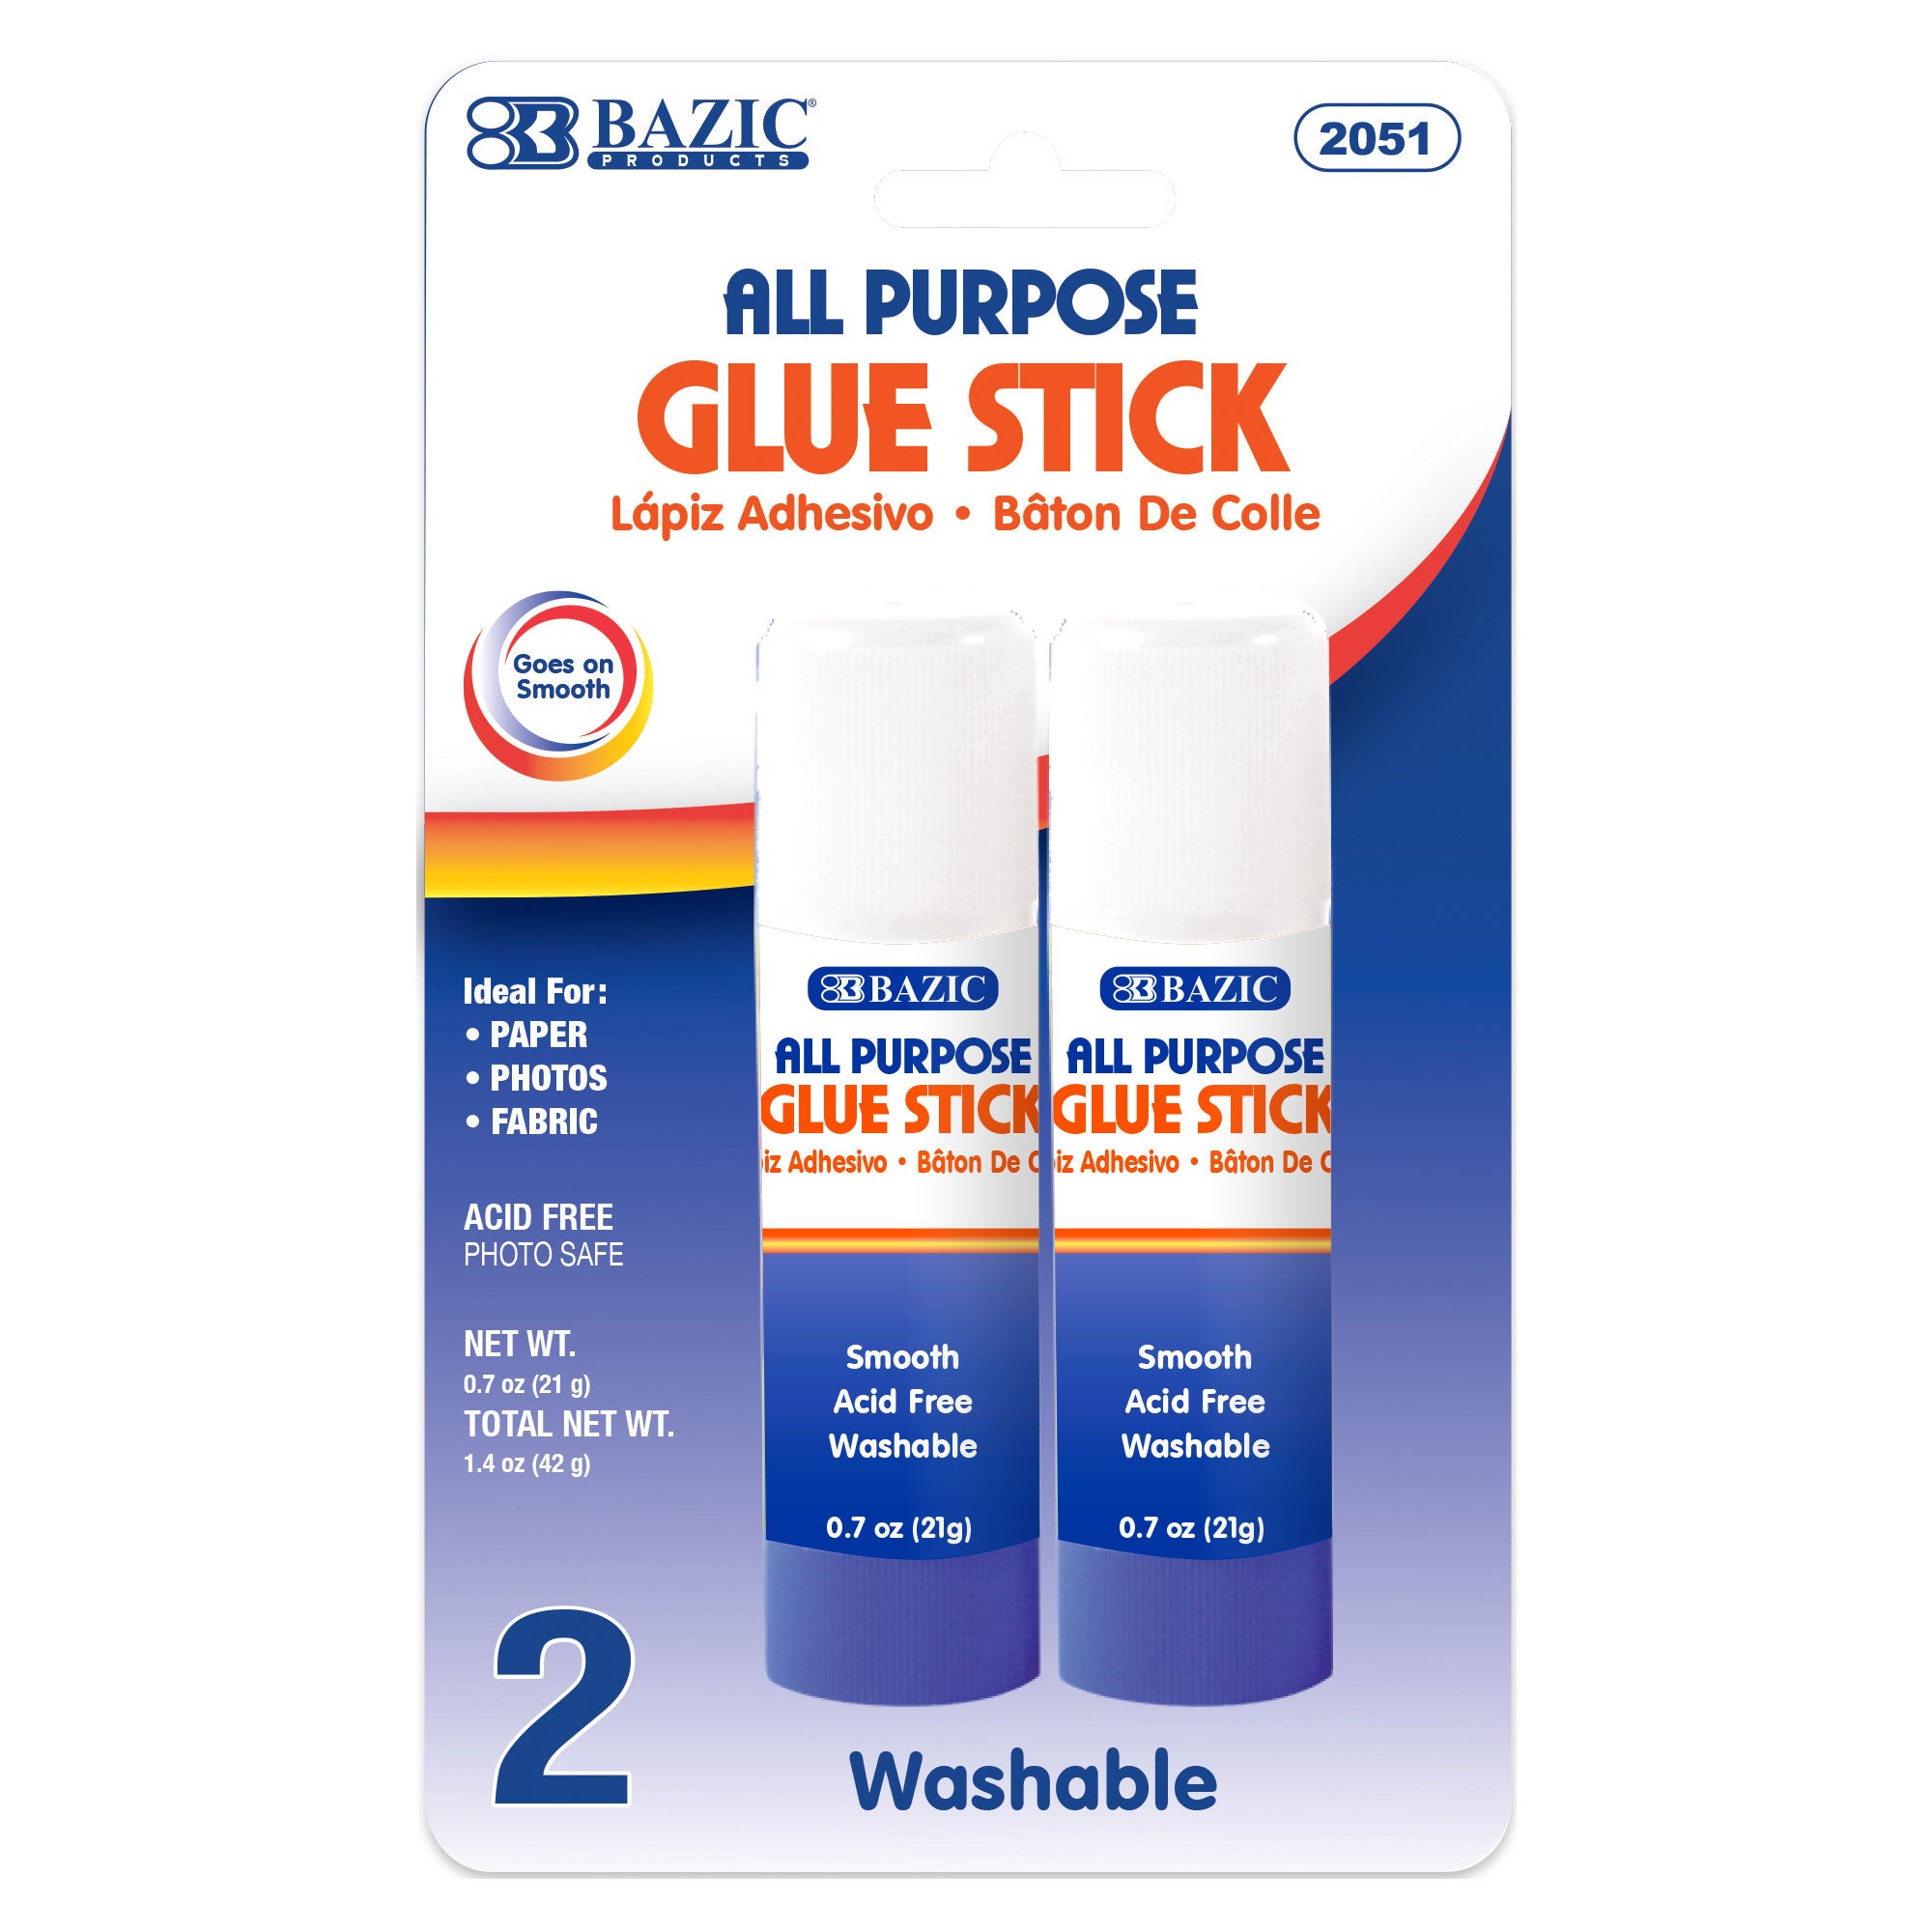 Glue Stick Premium Pack 0.7 oz (21g) (12 Sticks)